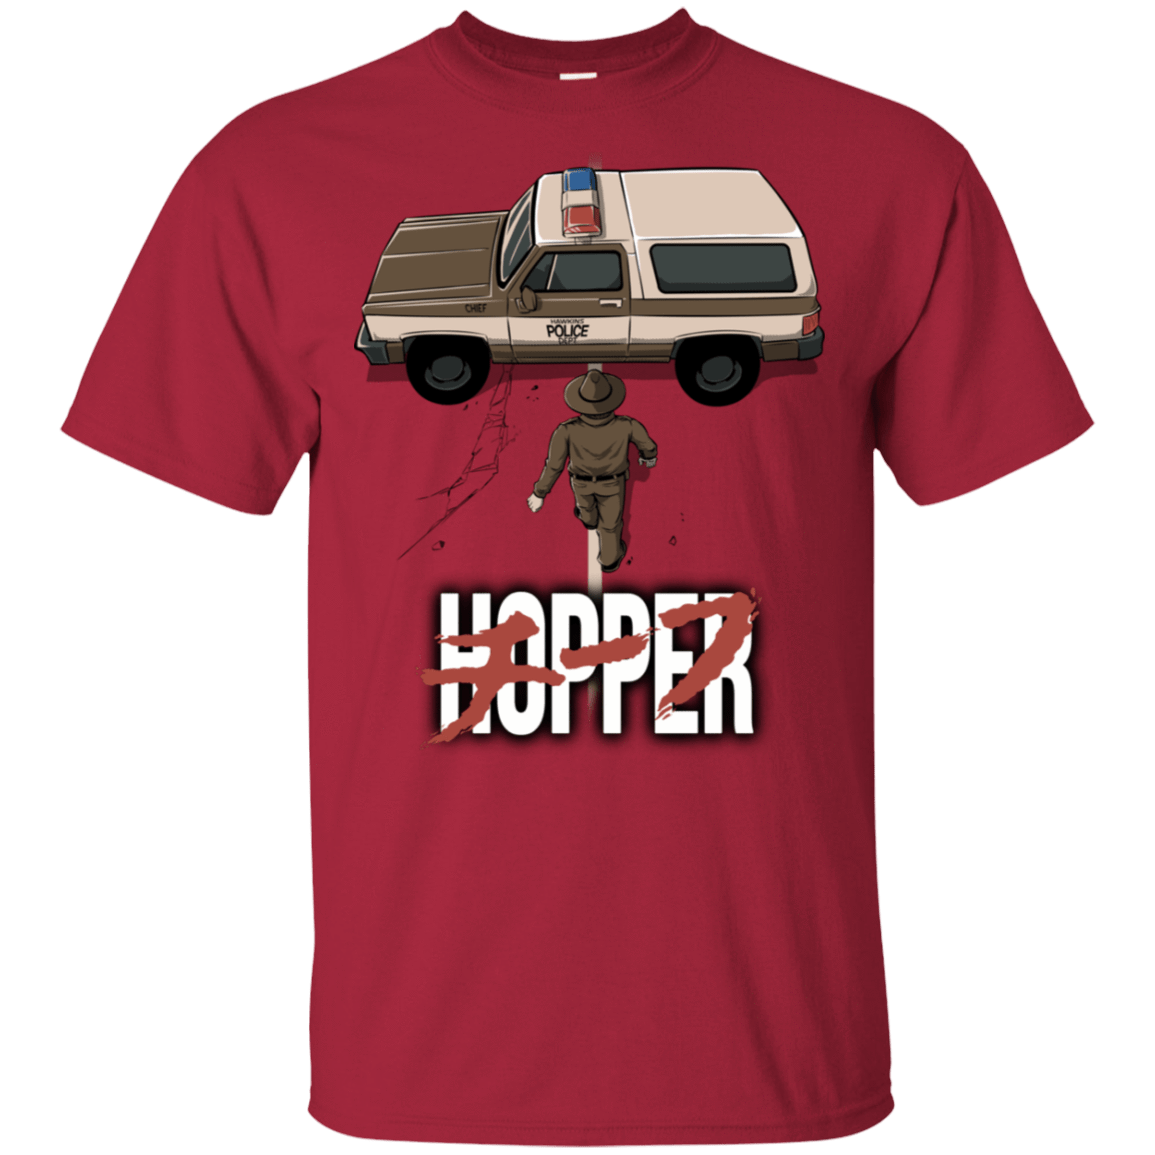 T-Shirts Cardinal / S Chief Hopper T-Shirt